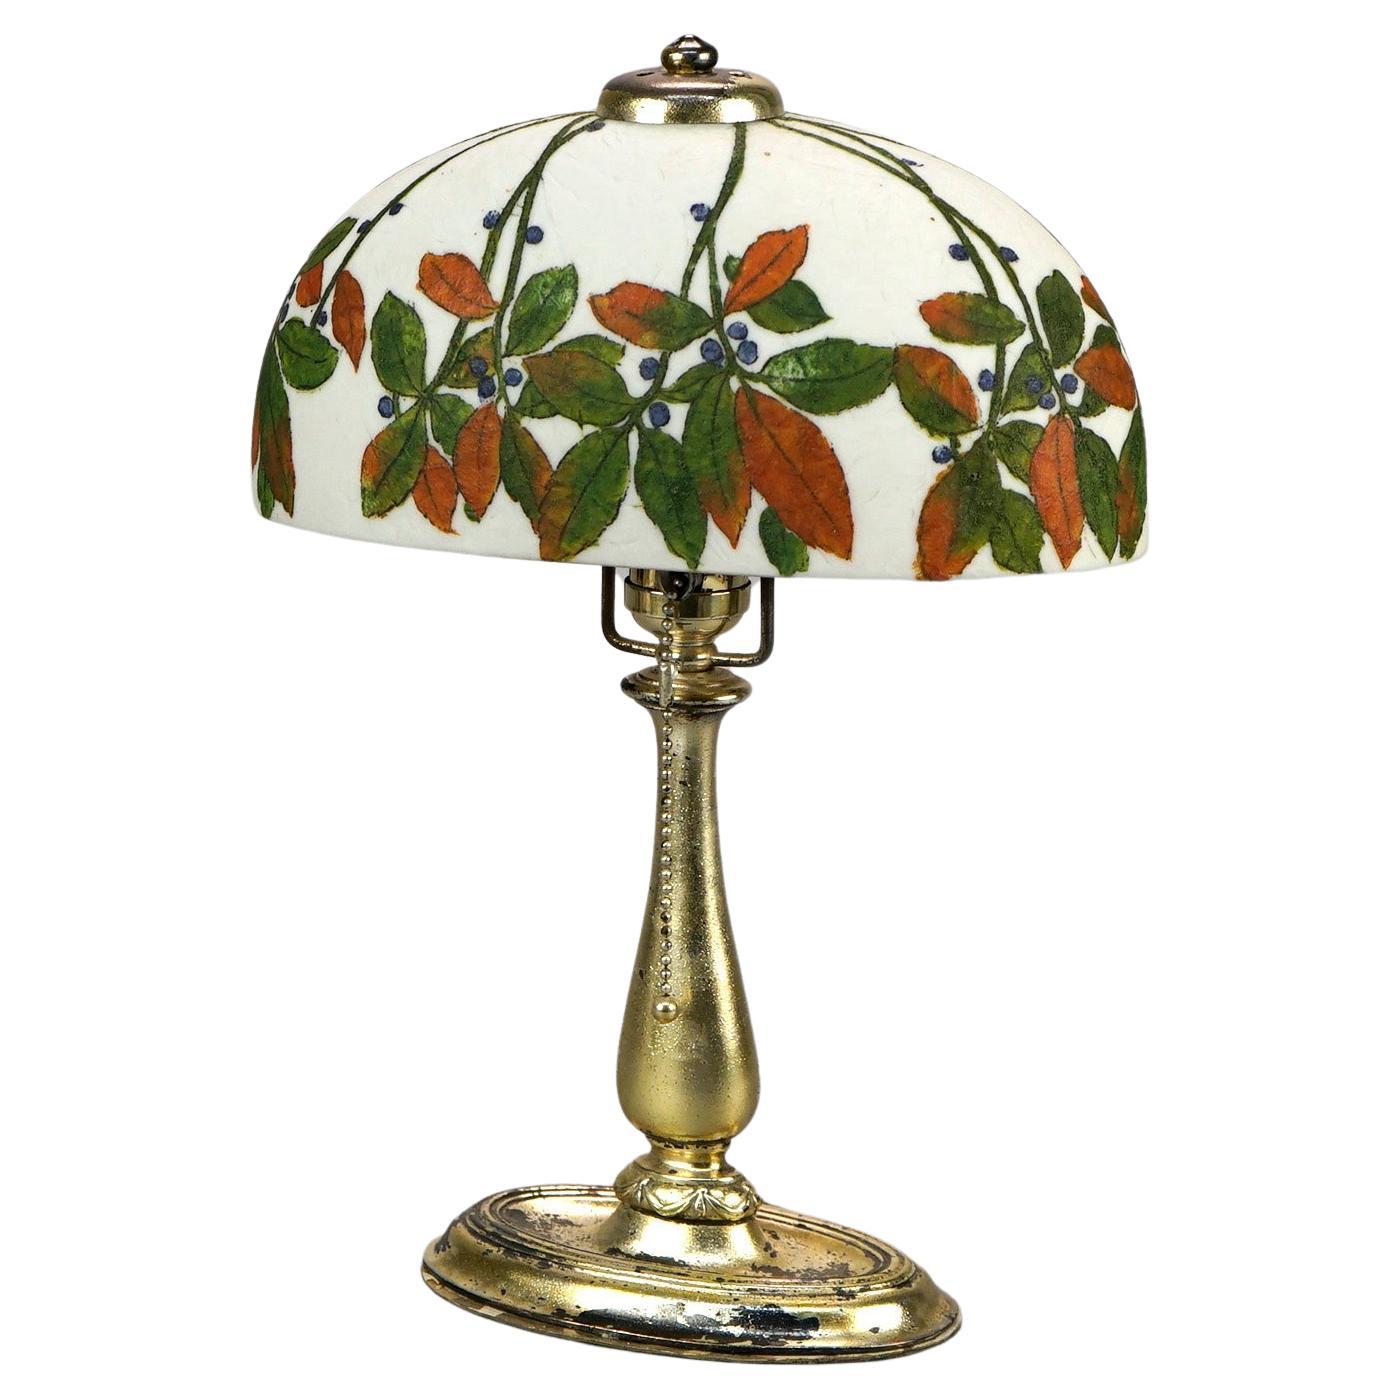 Rare Antique Handel Oval Leaf & Berry Shade Boudoir Lamp, Signed, c1920